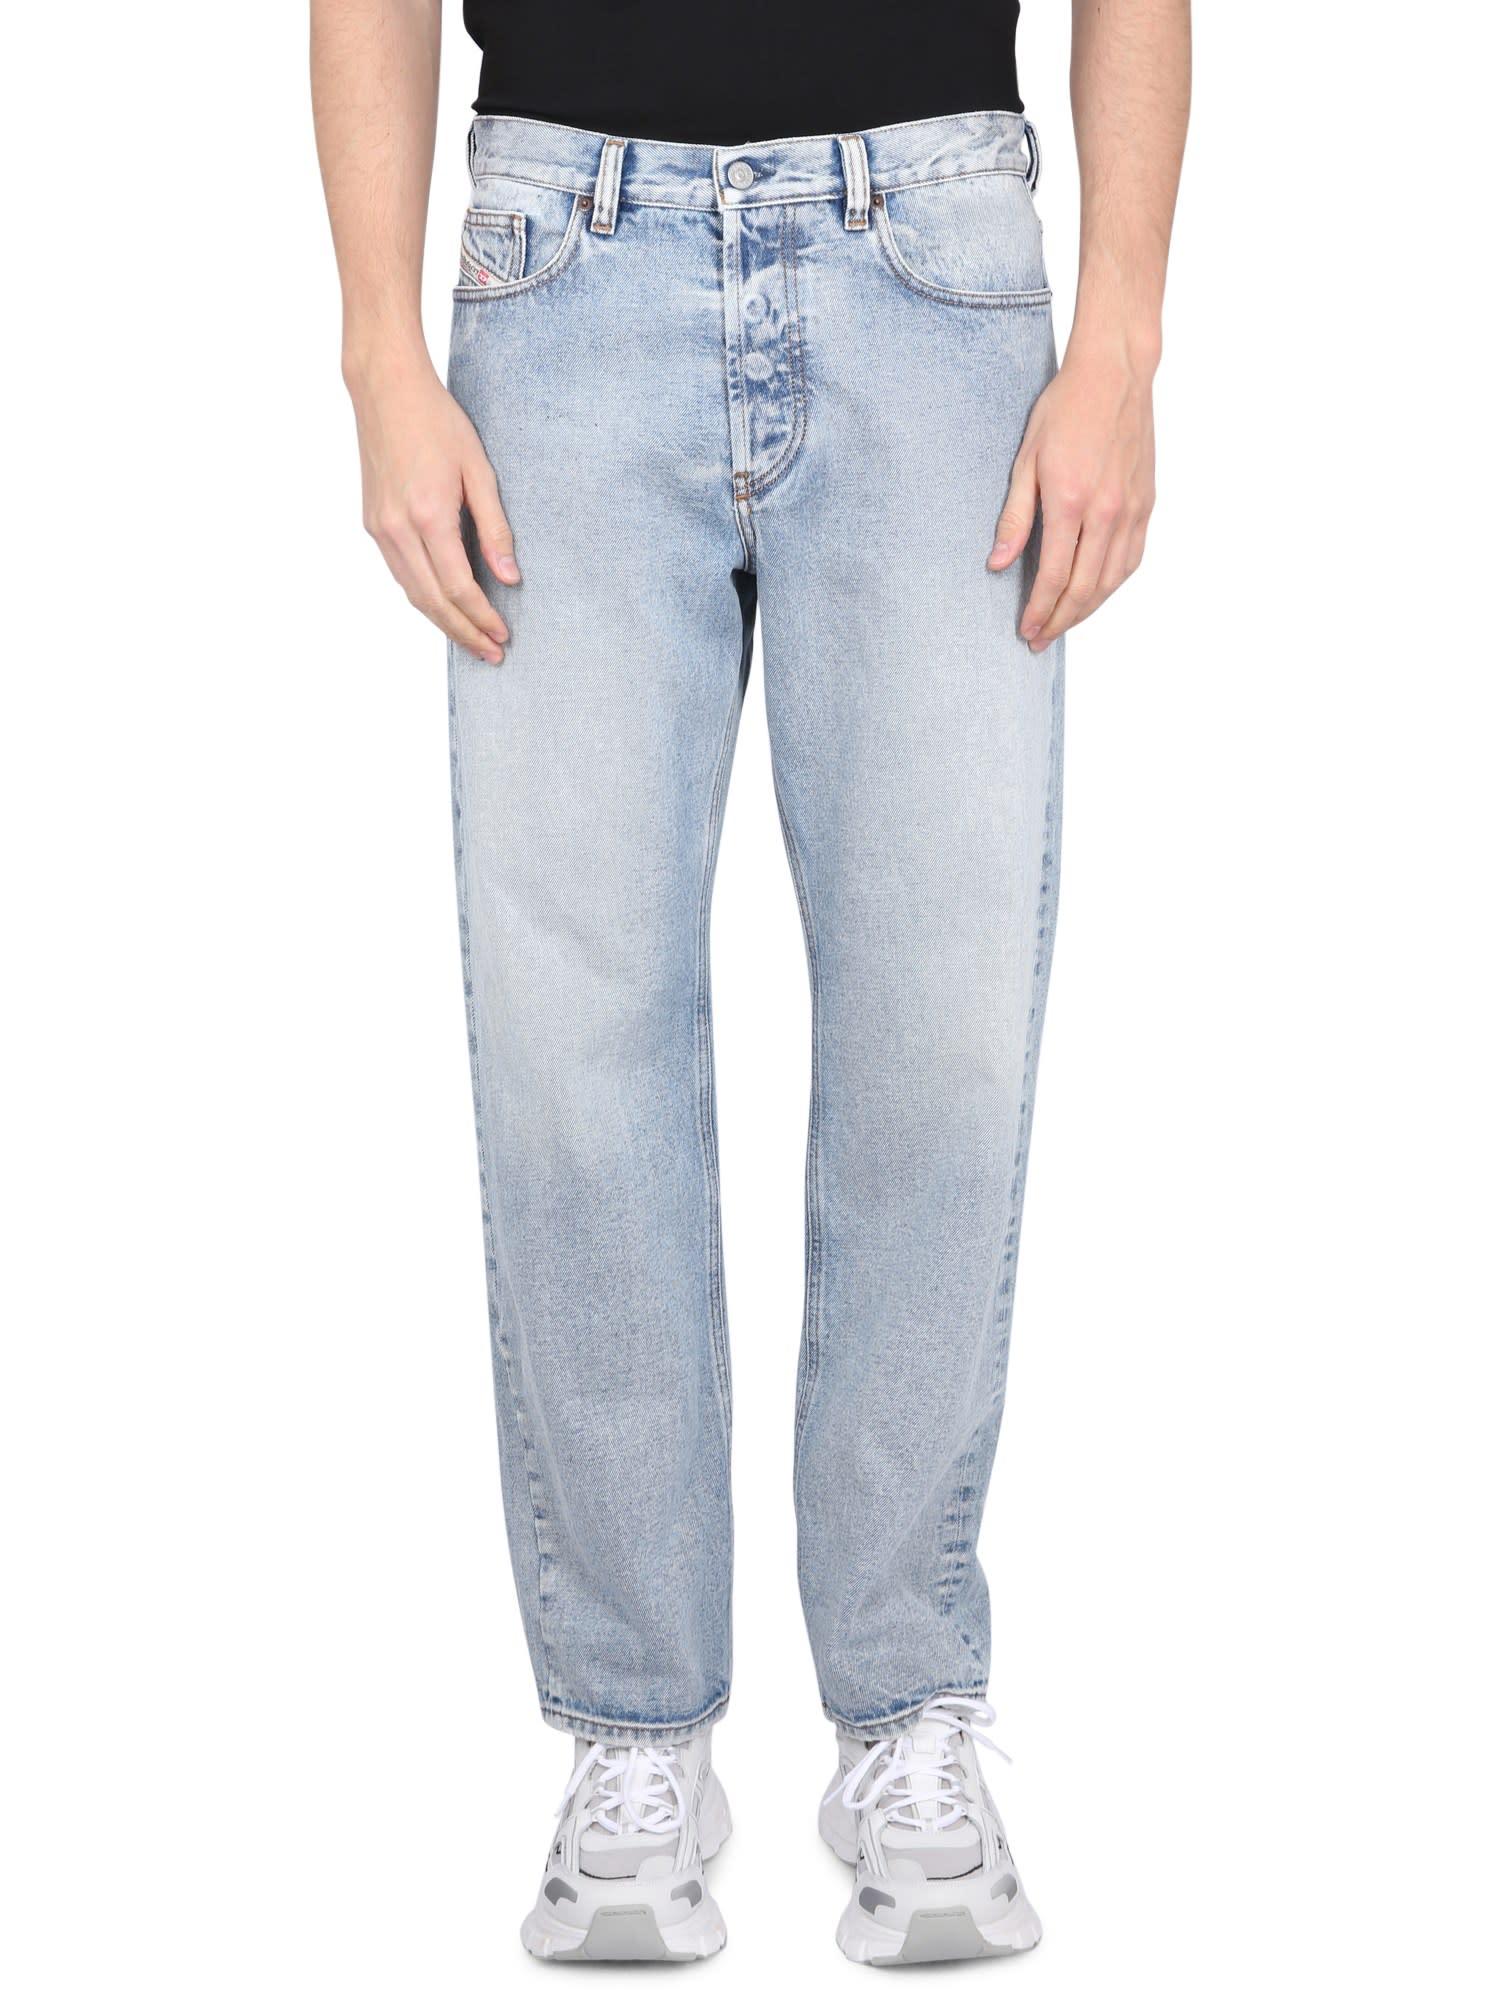 DIESEL Loose Fit Jeans in Blue for Men | Lyst